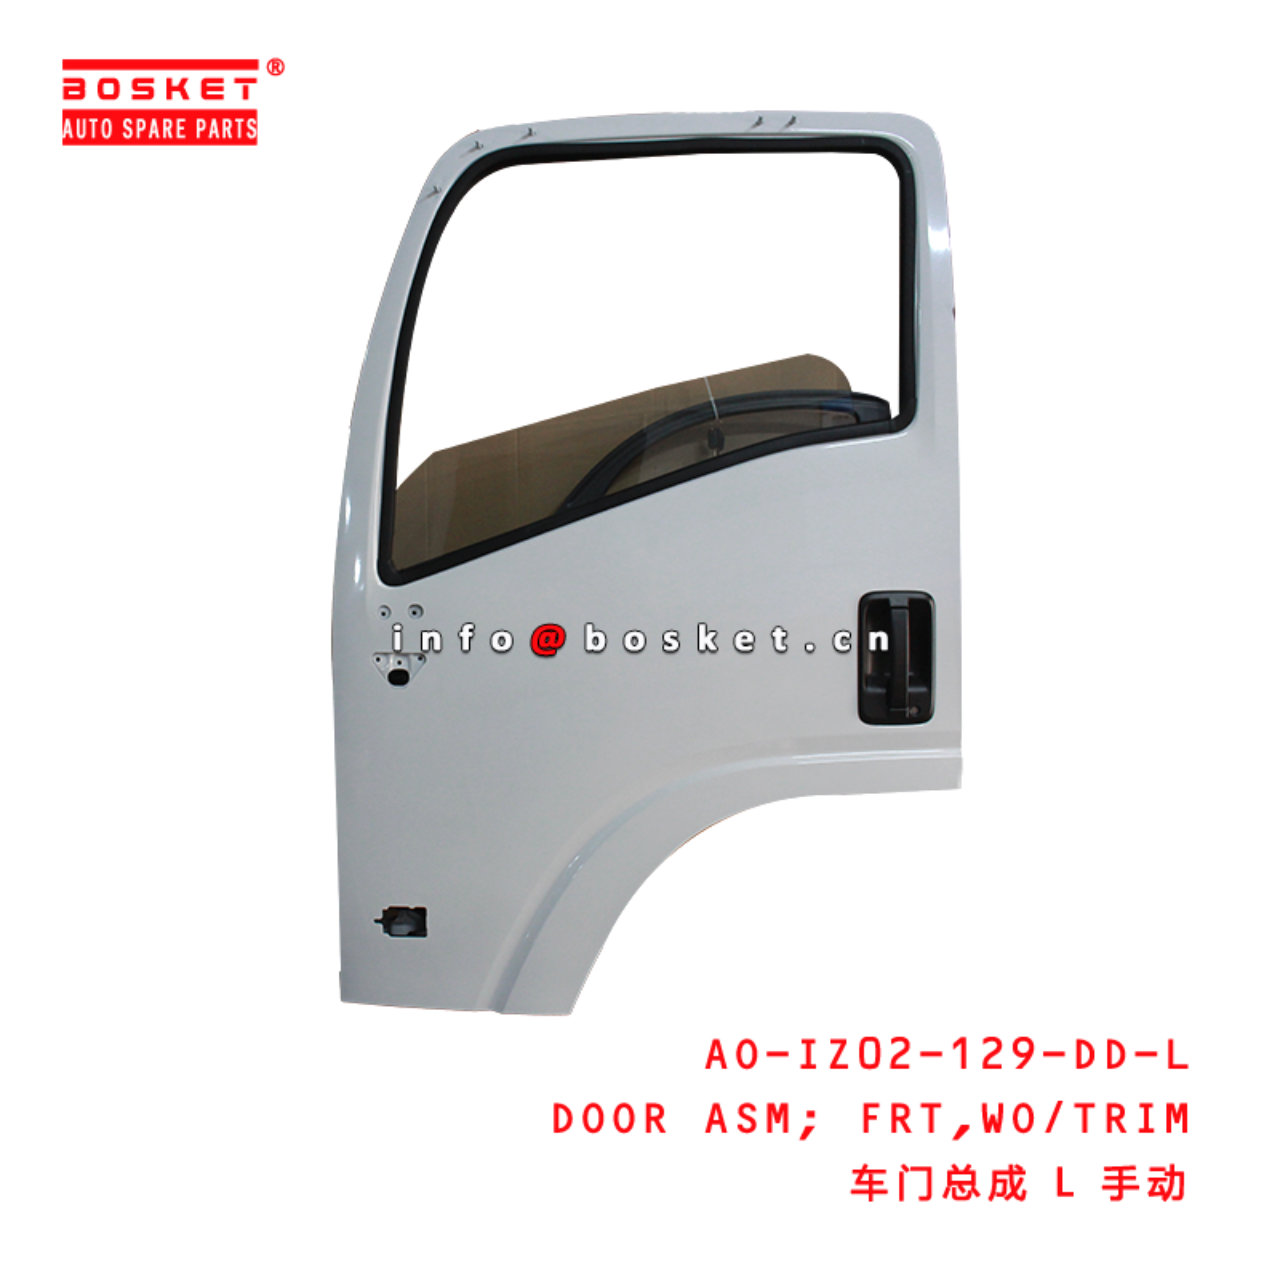 AO-IZ02-129-DD-L Without Trim Frt Door Assembly Suitable for ISUZU